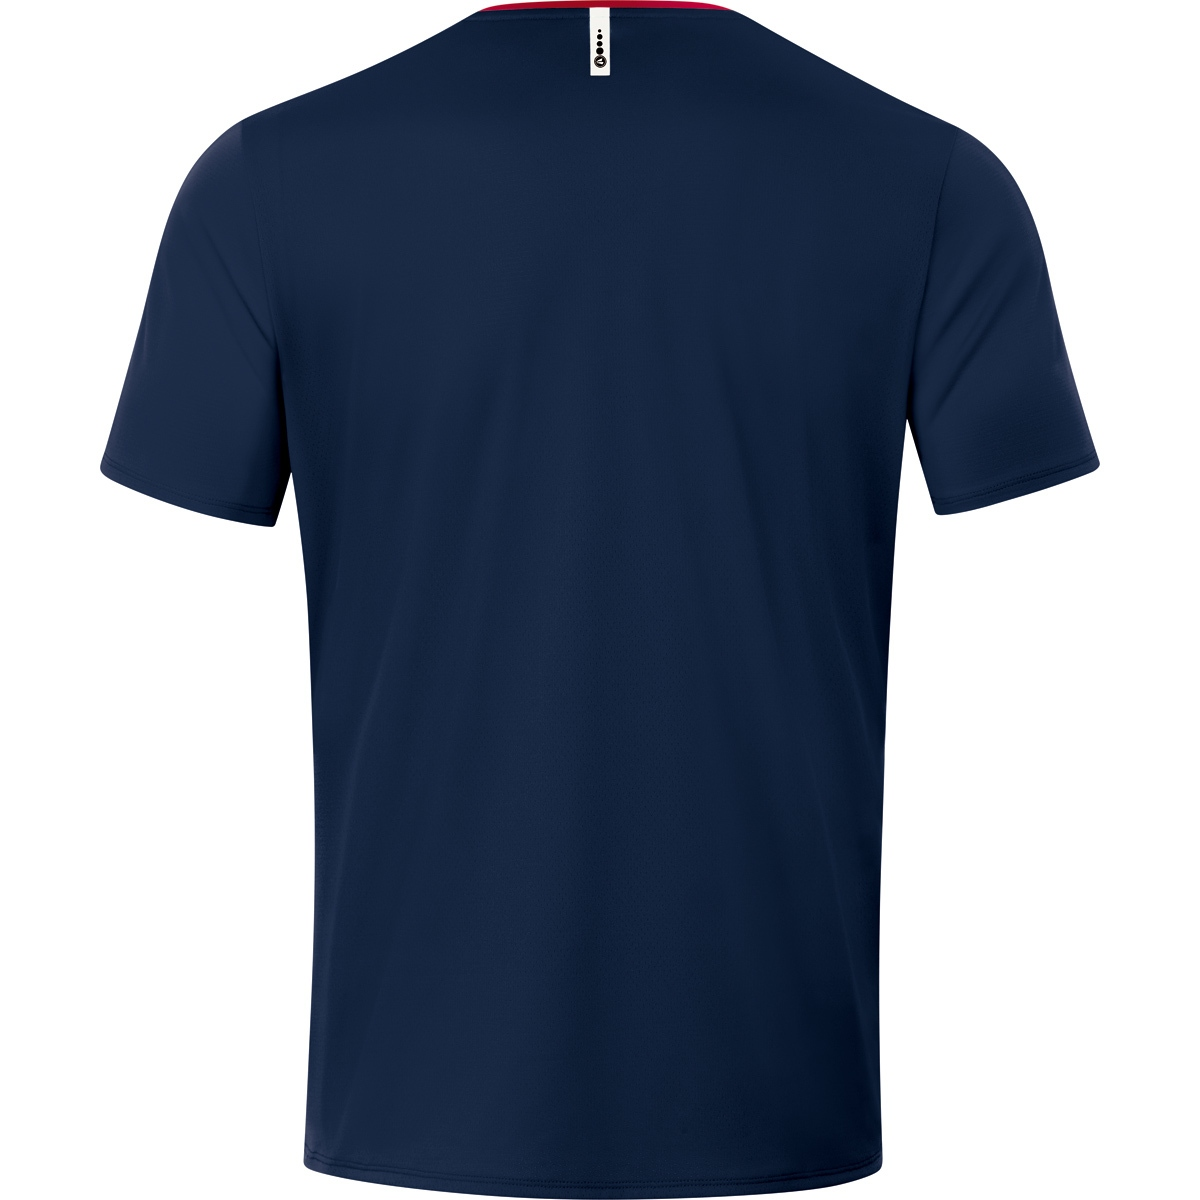 marine/chili Champ S, 2.0 6120 rot, Gr. JAKO Herren, T-Shirt